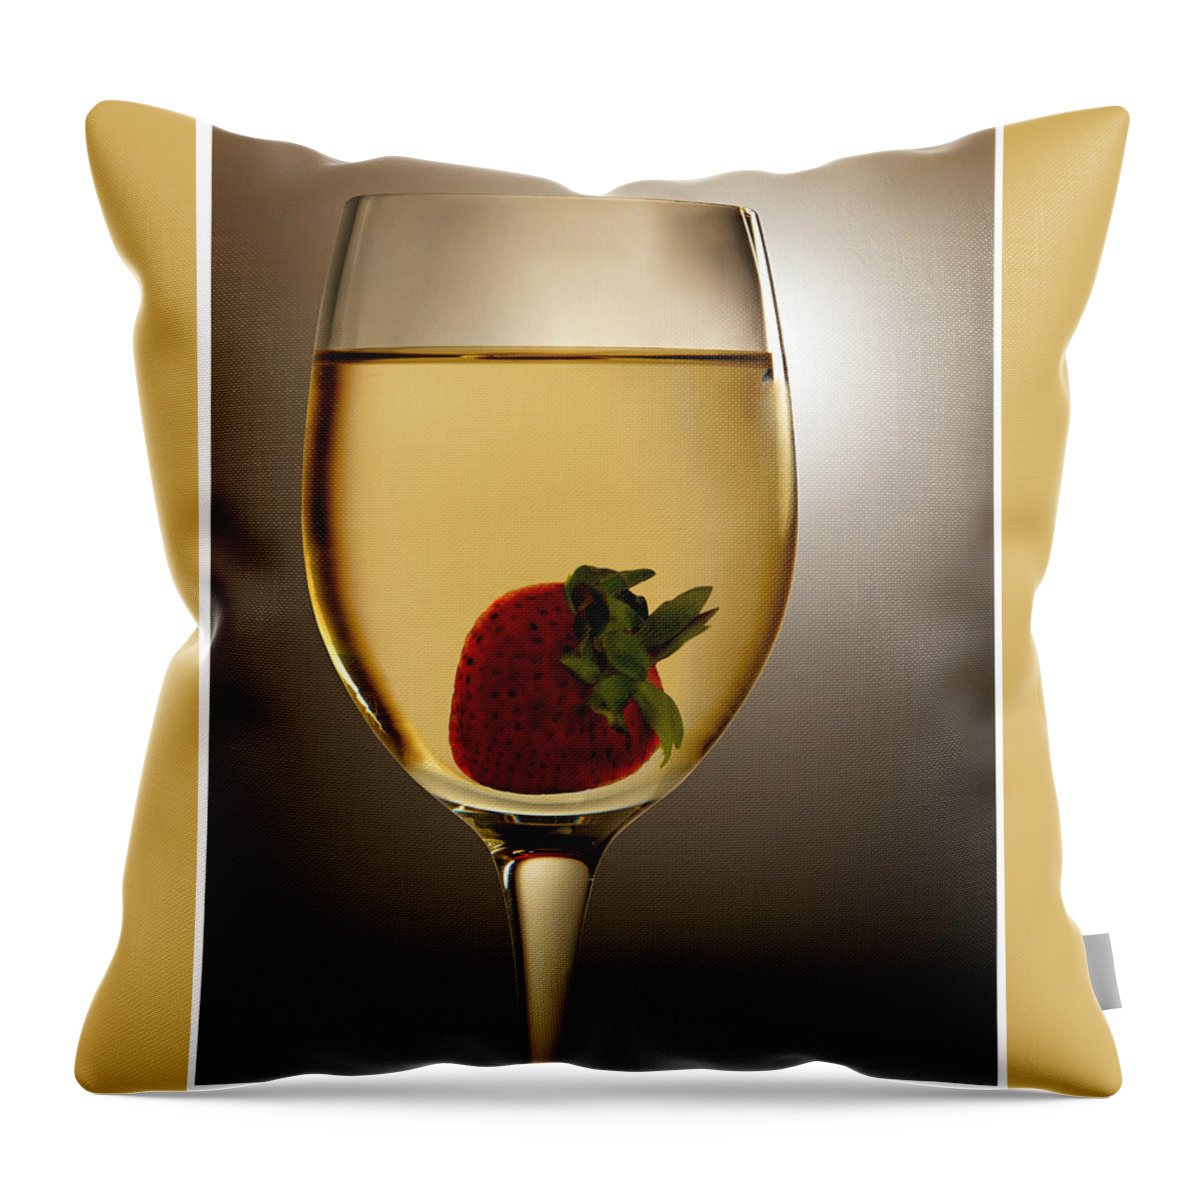 Strawberry Throw Pillow featuring the photograph Wild Strawberry by Joe Bonita